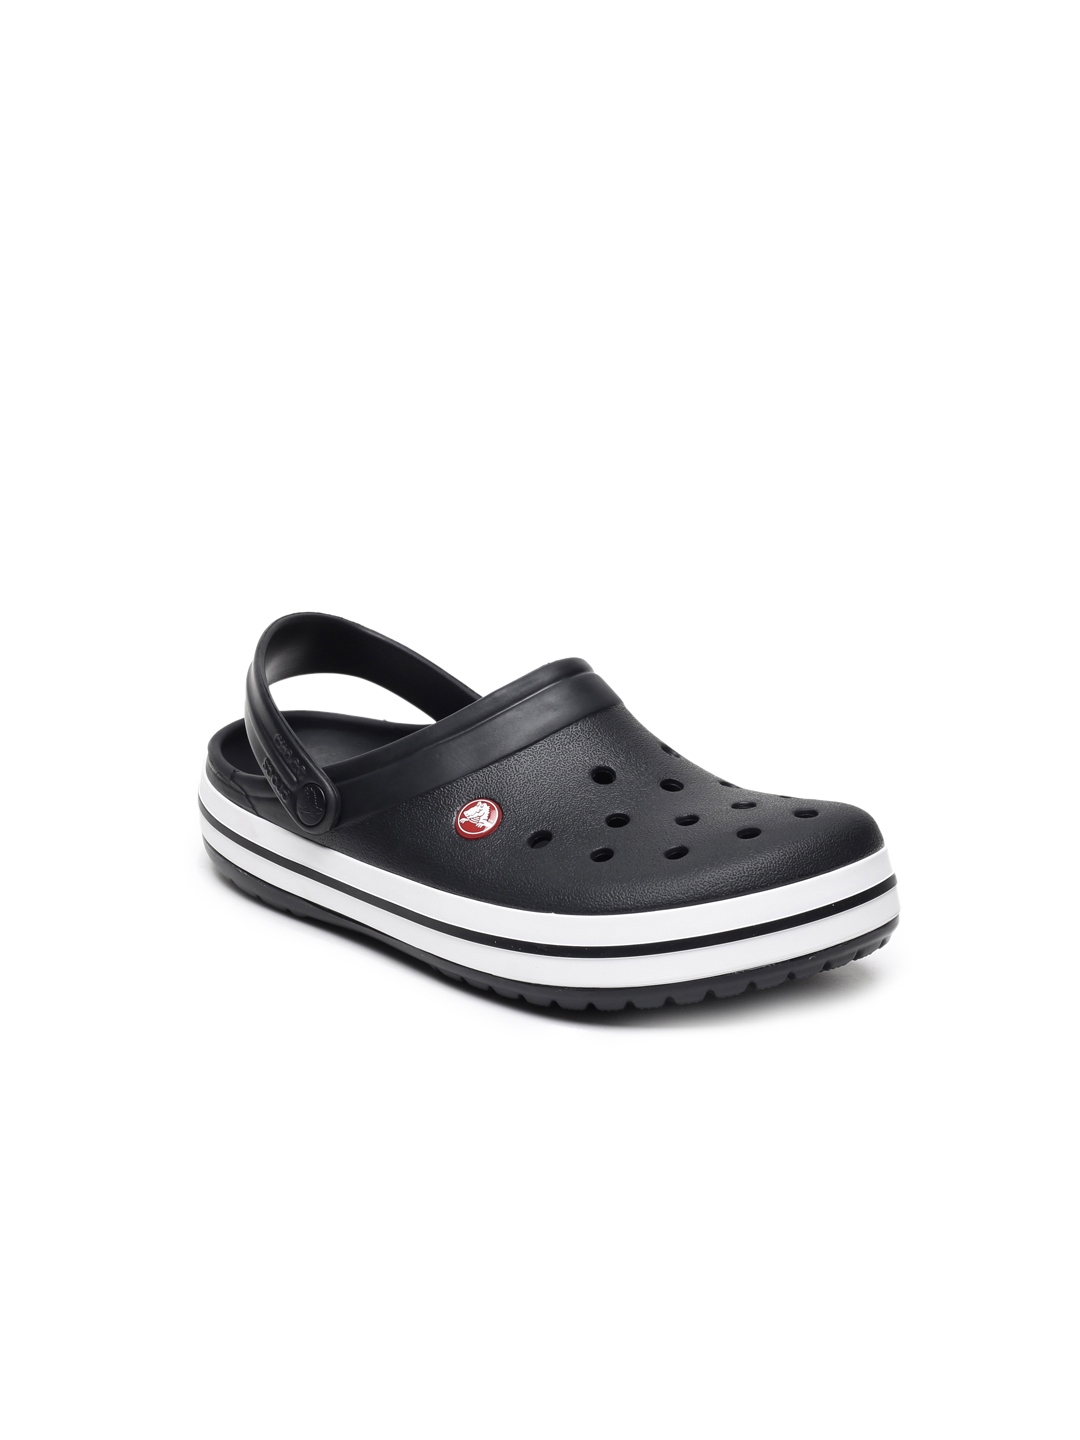 Buy Crocs Unisex Black Clogs - Flip Flops for Unisex 7441691 | Myntra